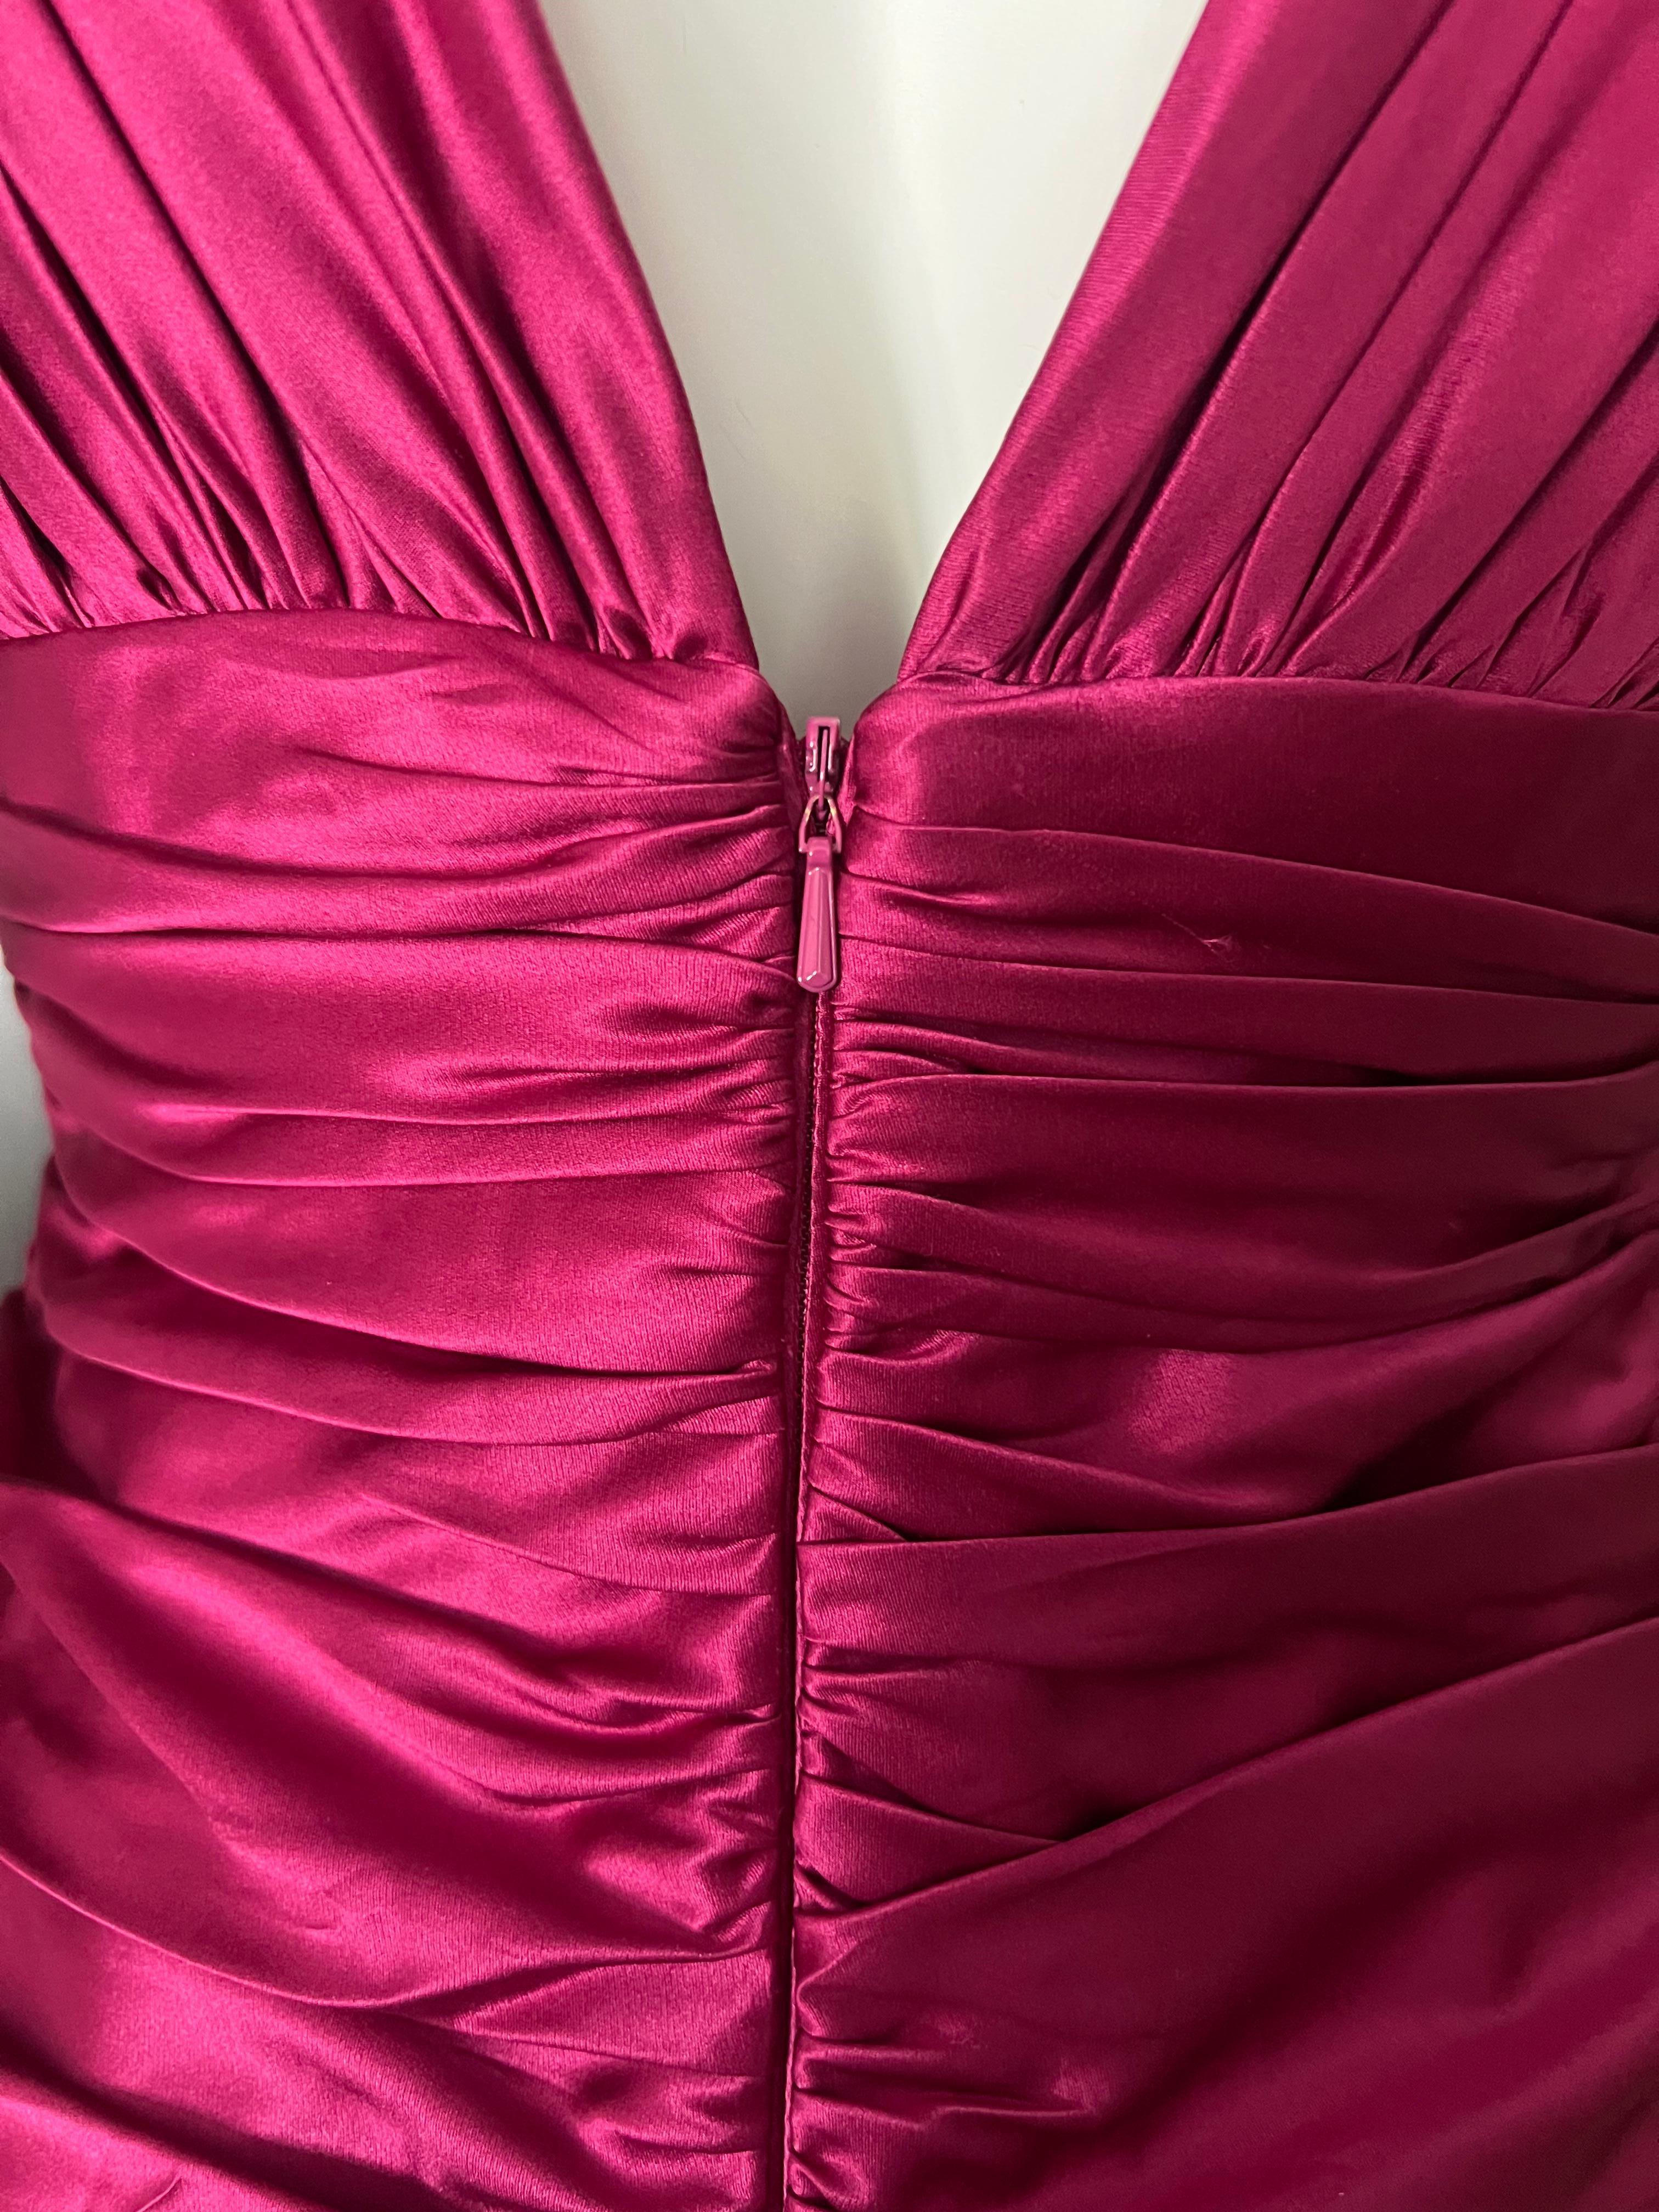 Carmen Marc Valvo - Robe courte en soie rose, taille 8 en vente 1